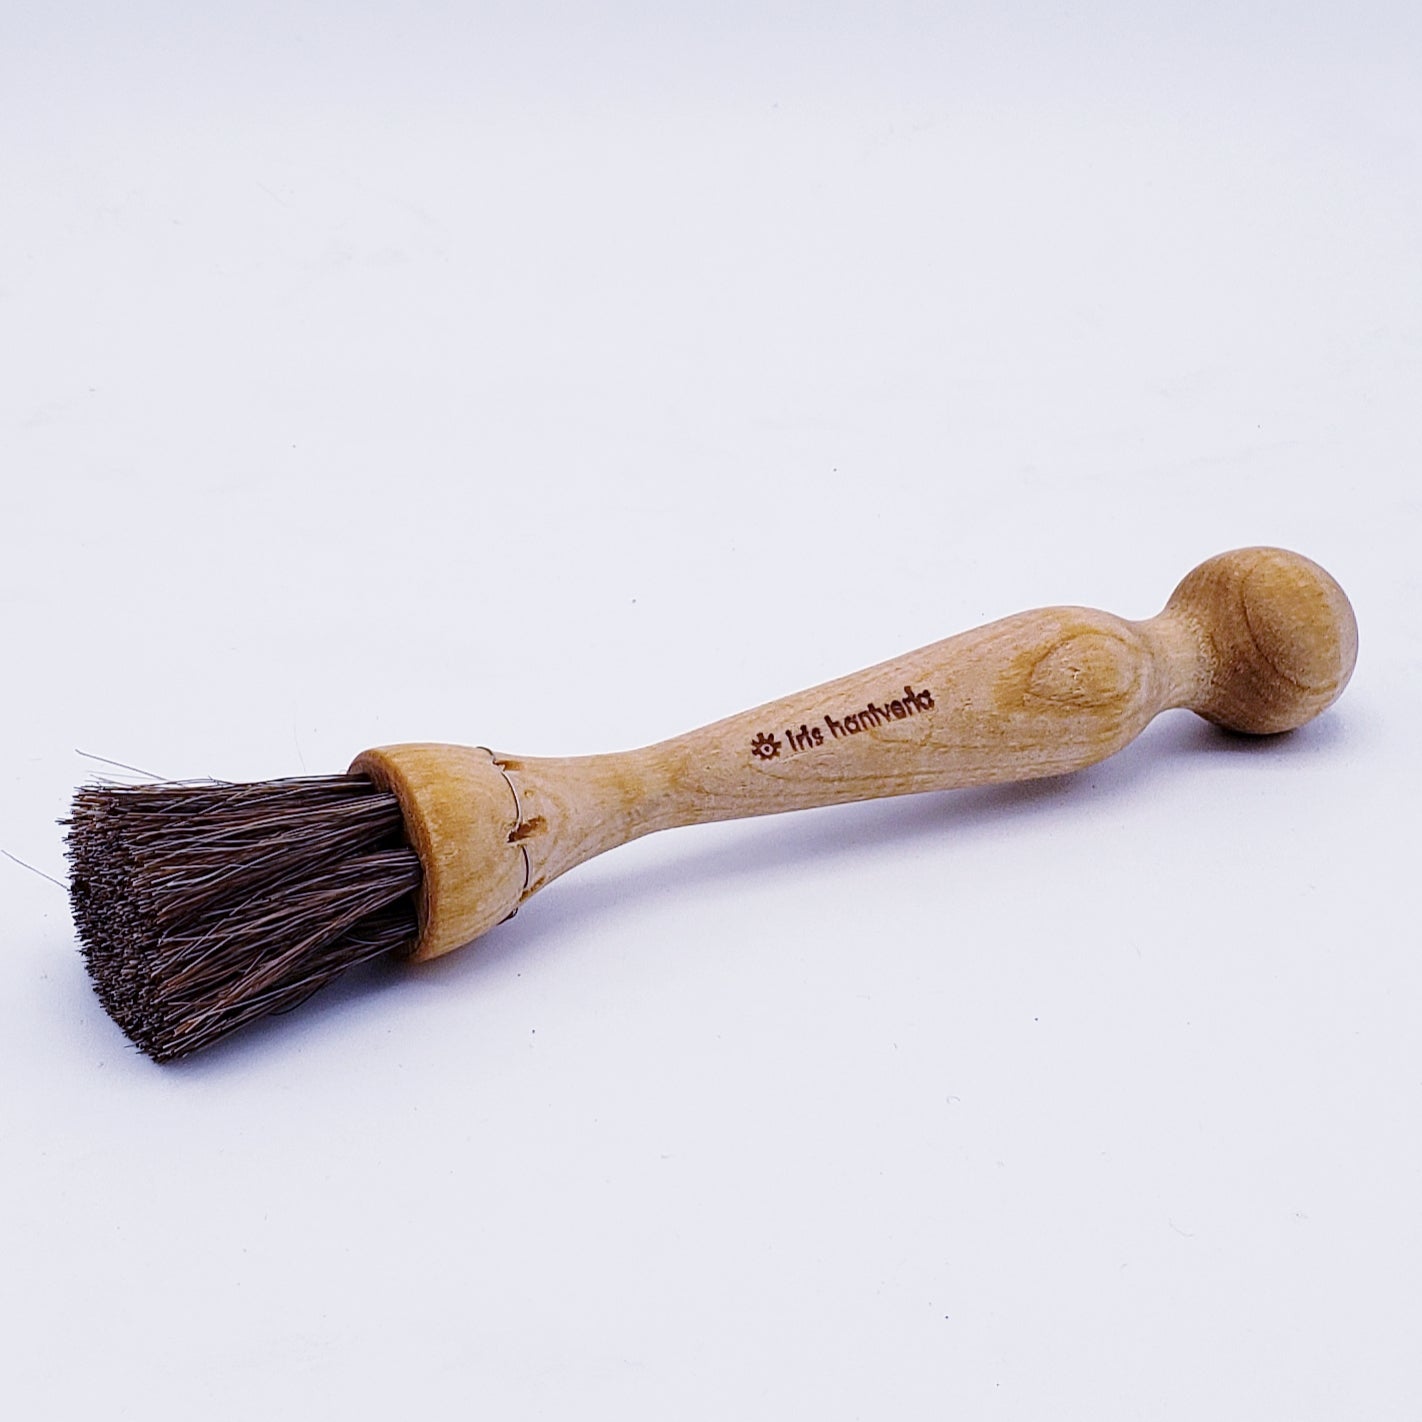 Cuisinox Mushroom Brush with Wooden Top